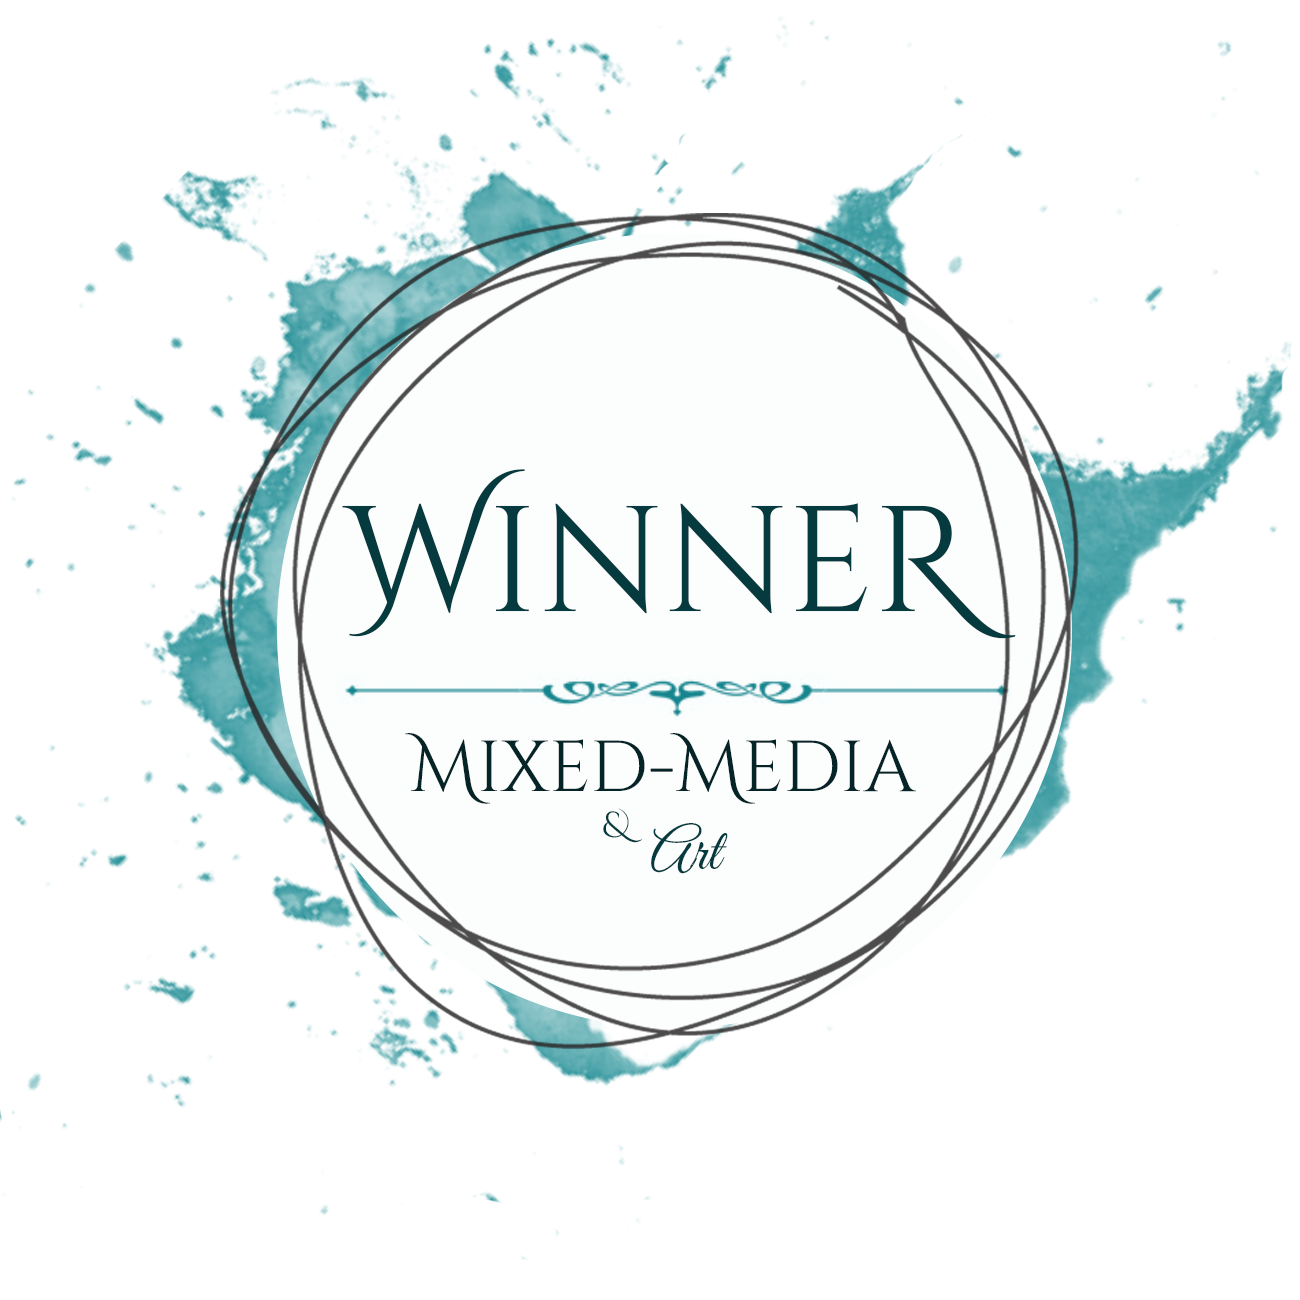 Mixed Media & Art October 2017 challenge Winner